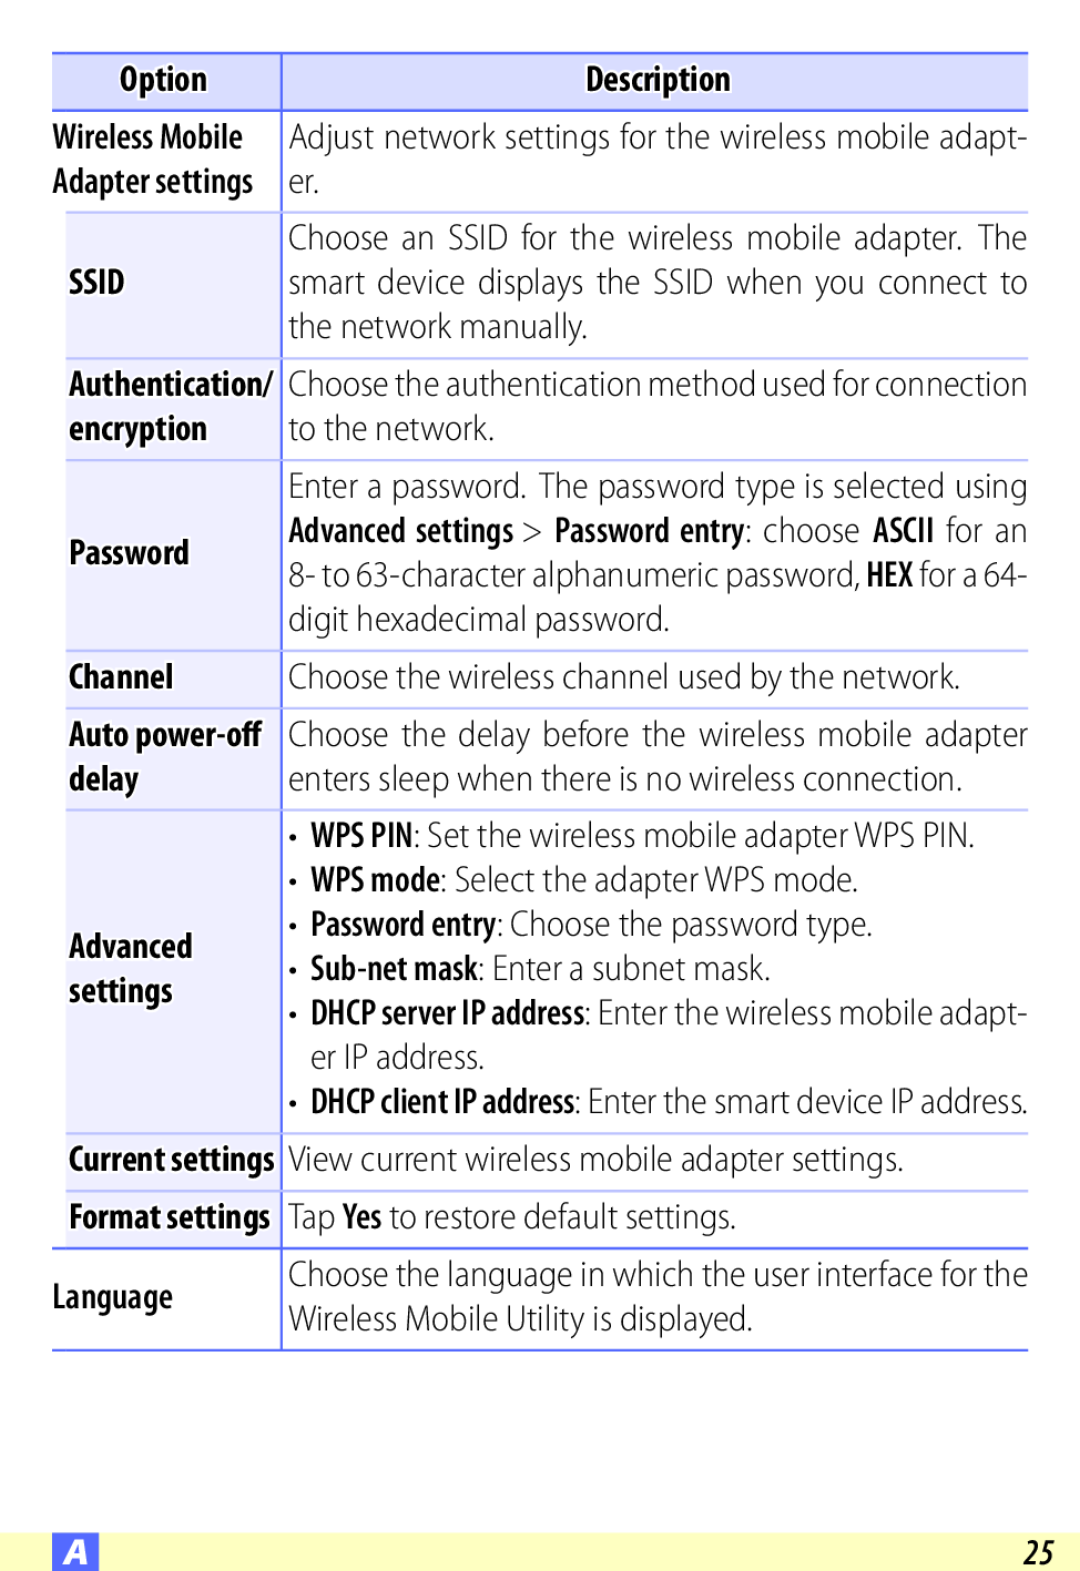 Nikon D600 user manual Ssid, encryption, Password, Channel, delay, Advanced, settings, Language, Option, Description 